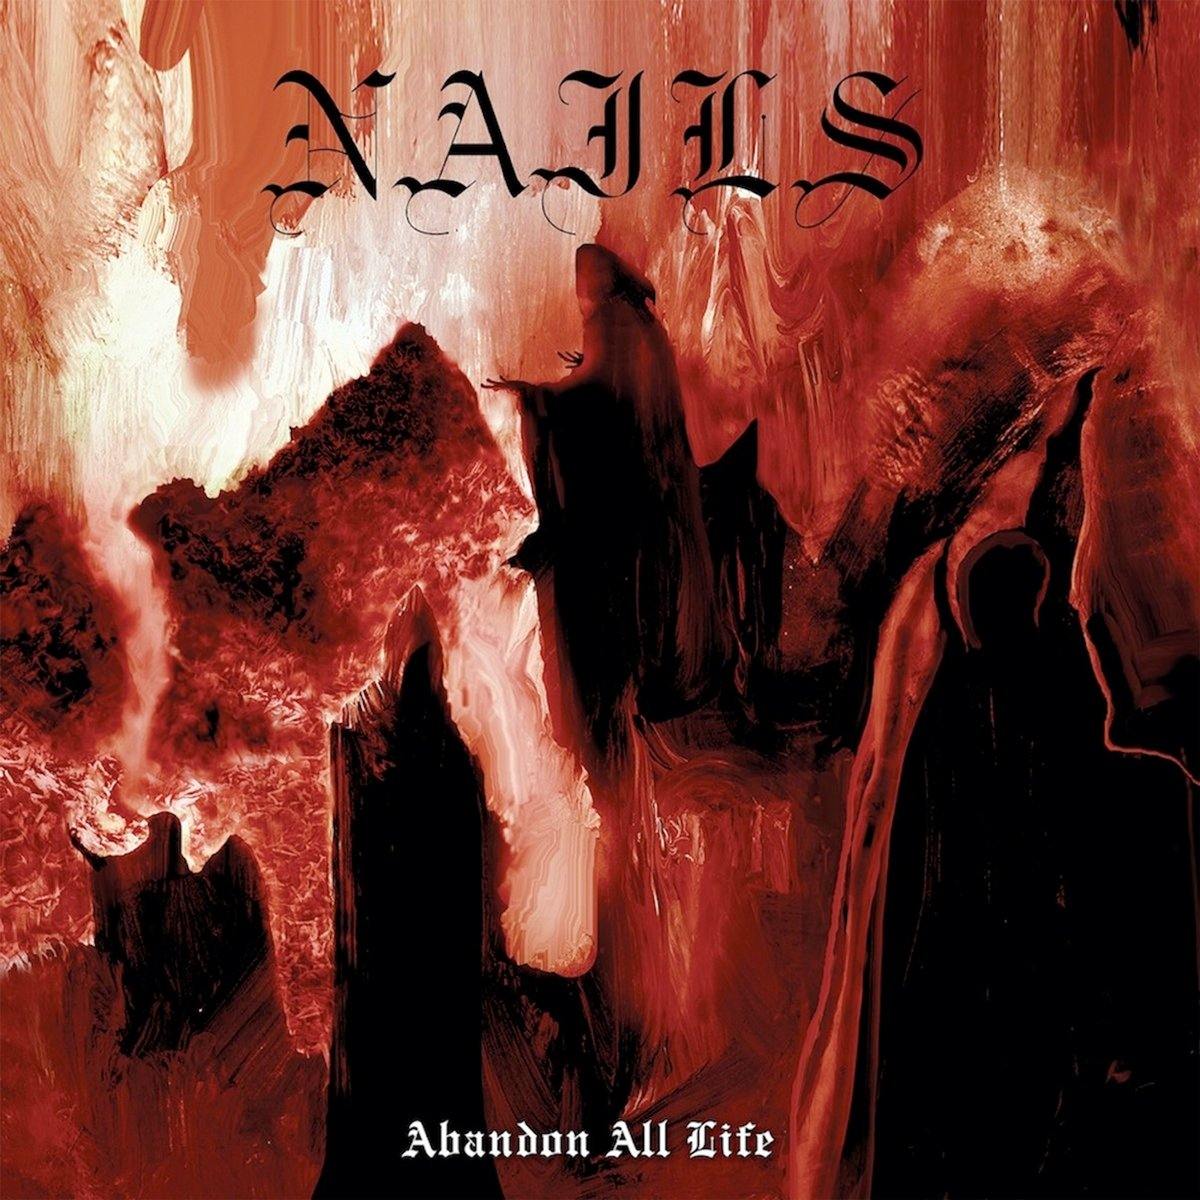 Buy – Nails "Abandon All Life" 12" – Band & Music Merch – Cold Cuts Merch